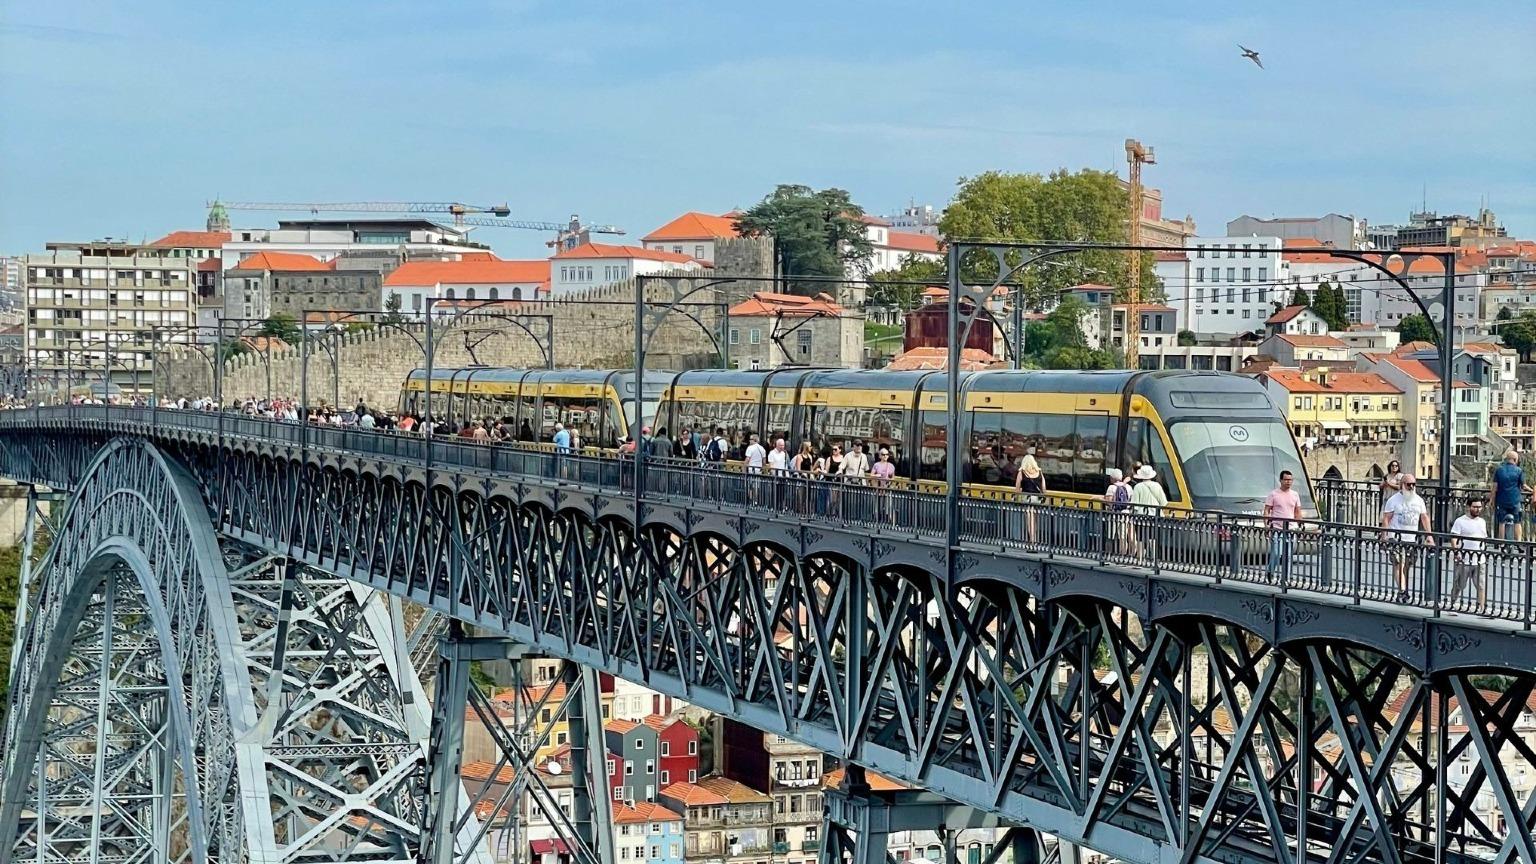 The Metro of Porto travels atop the iconic Luis I Bridge, connecting Gaia and Porto.